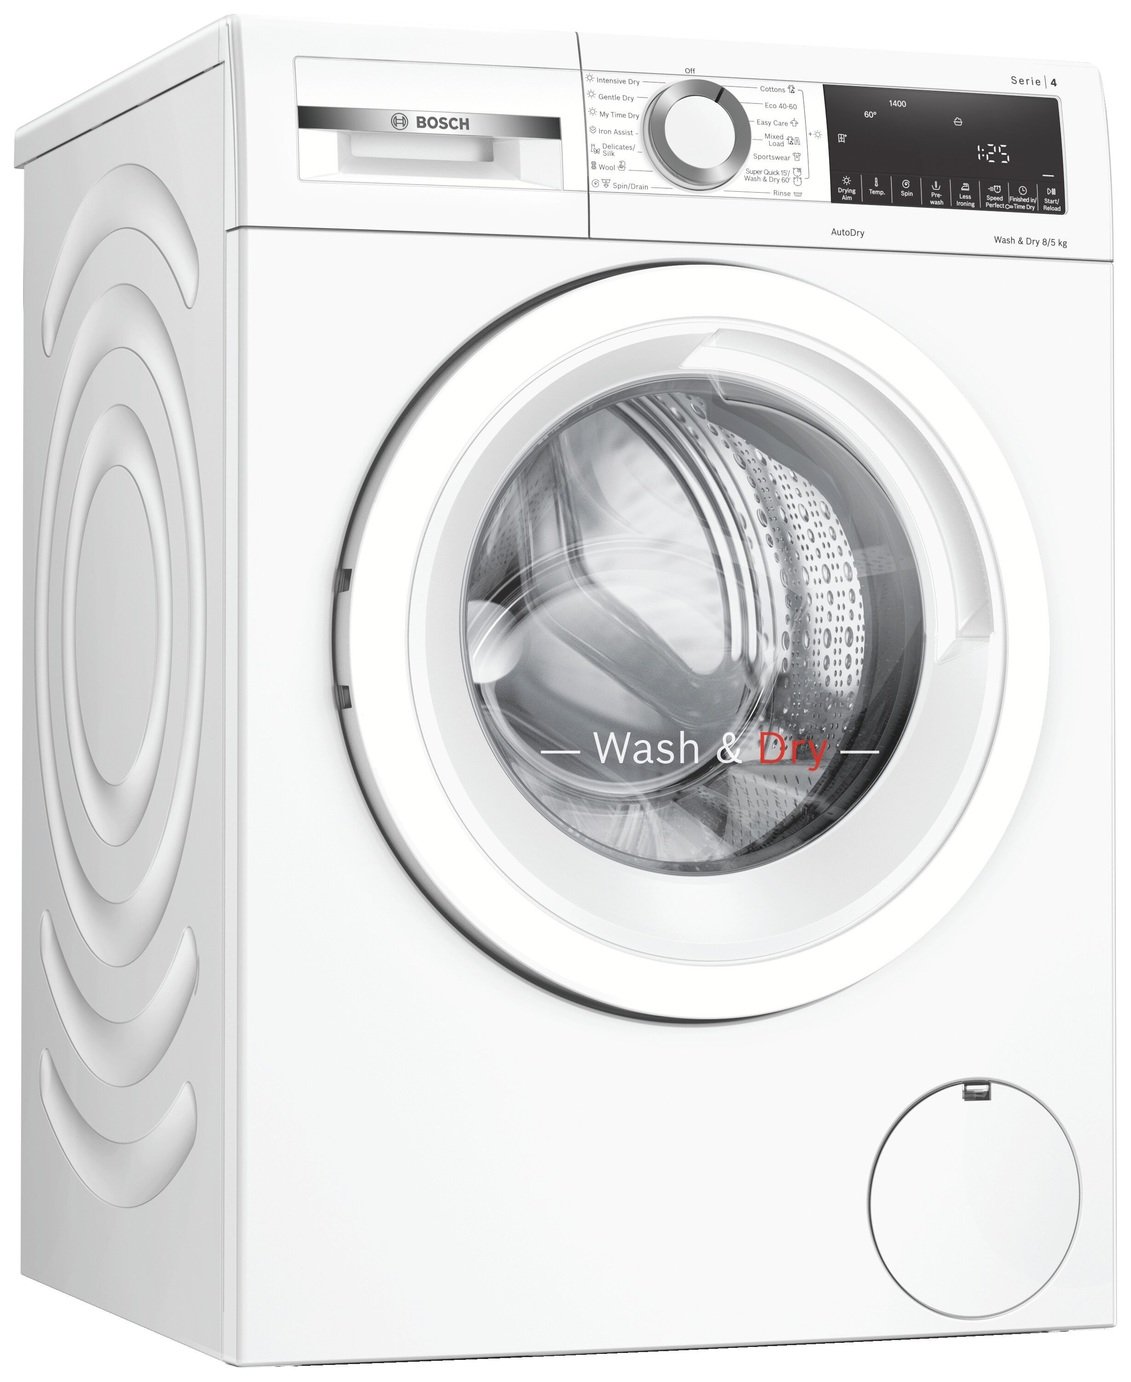 Bosch WNA134U8GB 8KG/5KG 1400 Spin Washer Dryer - White